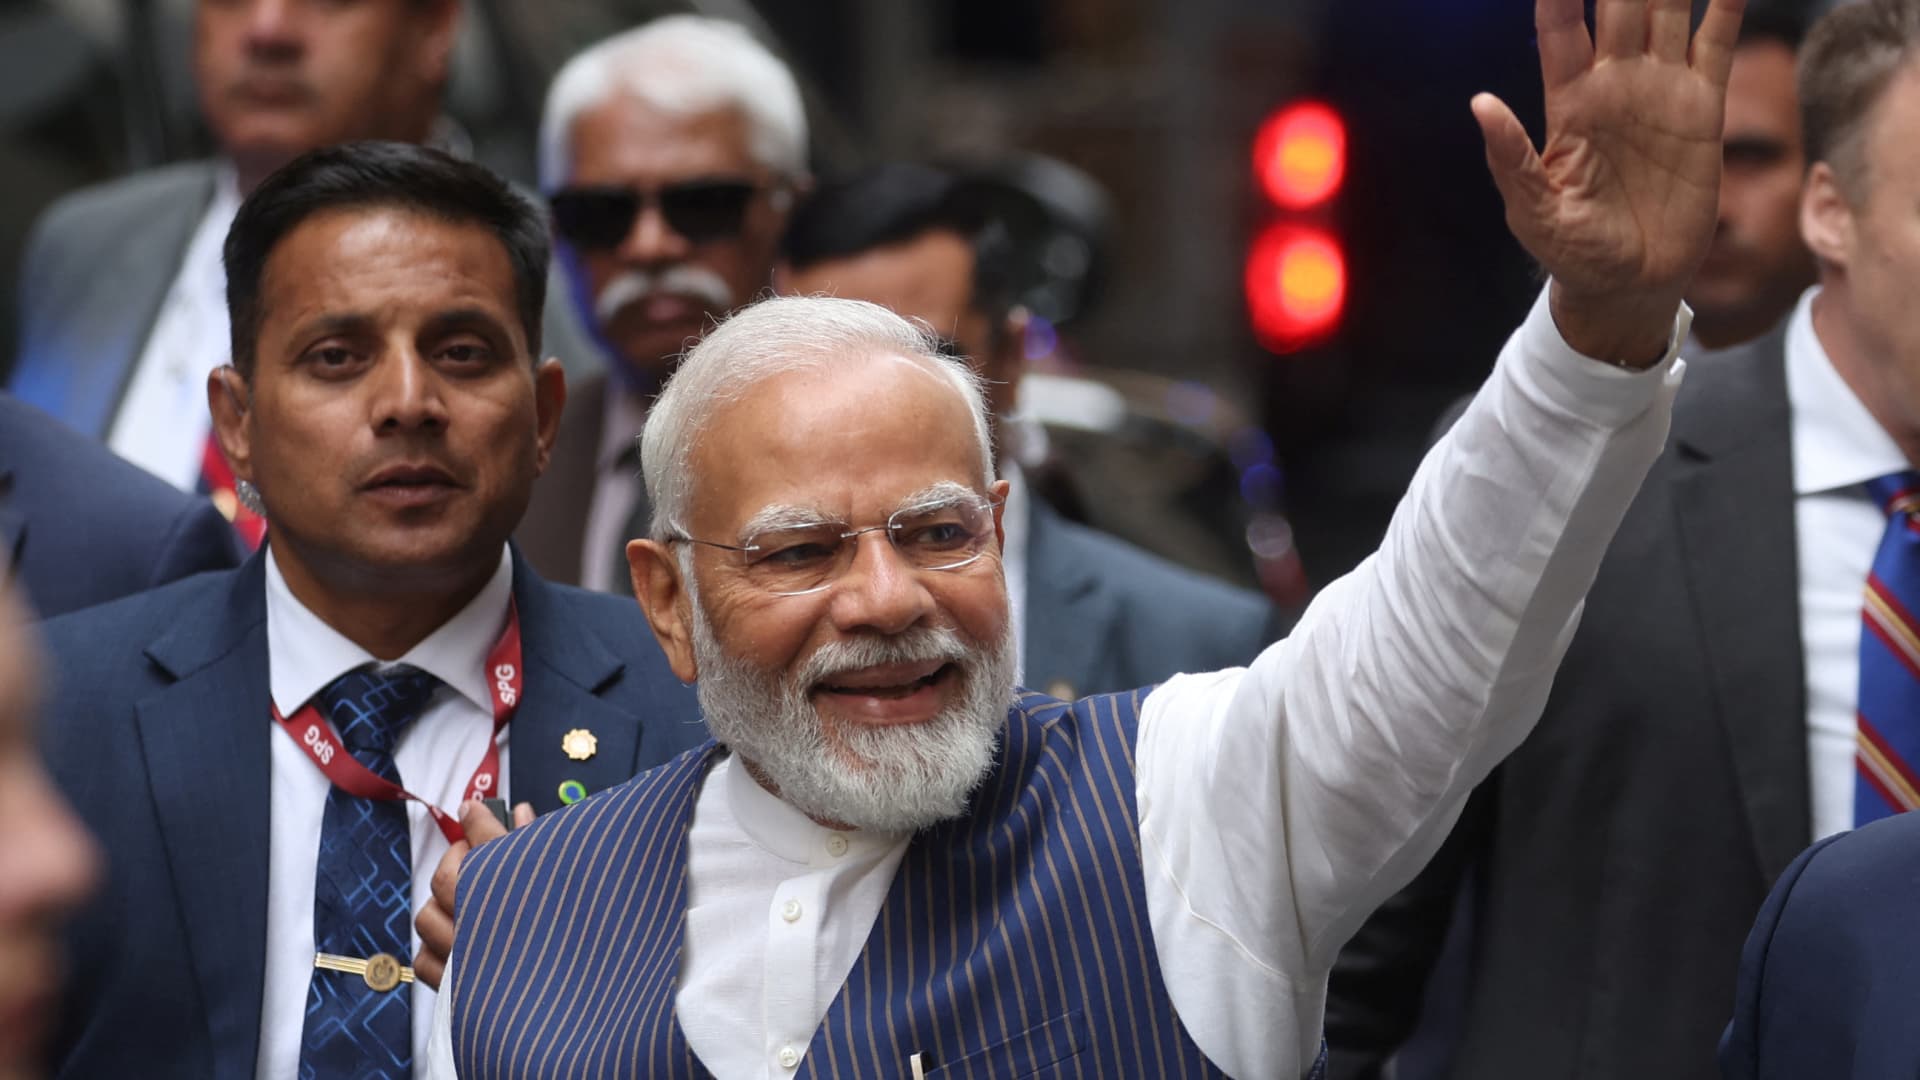 Top tech execs get ready to meet PM Modi as China's economy falters